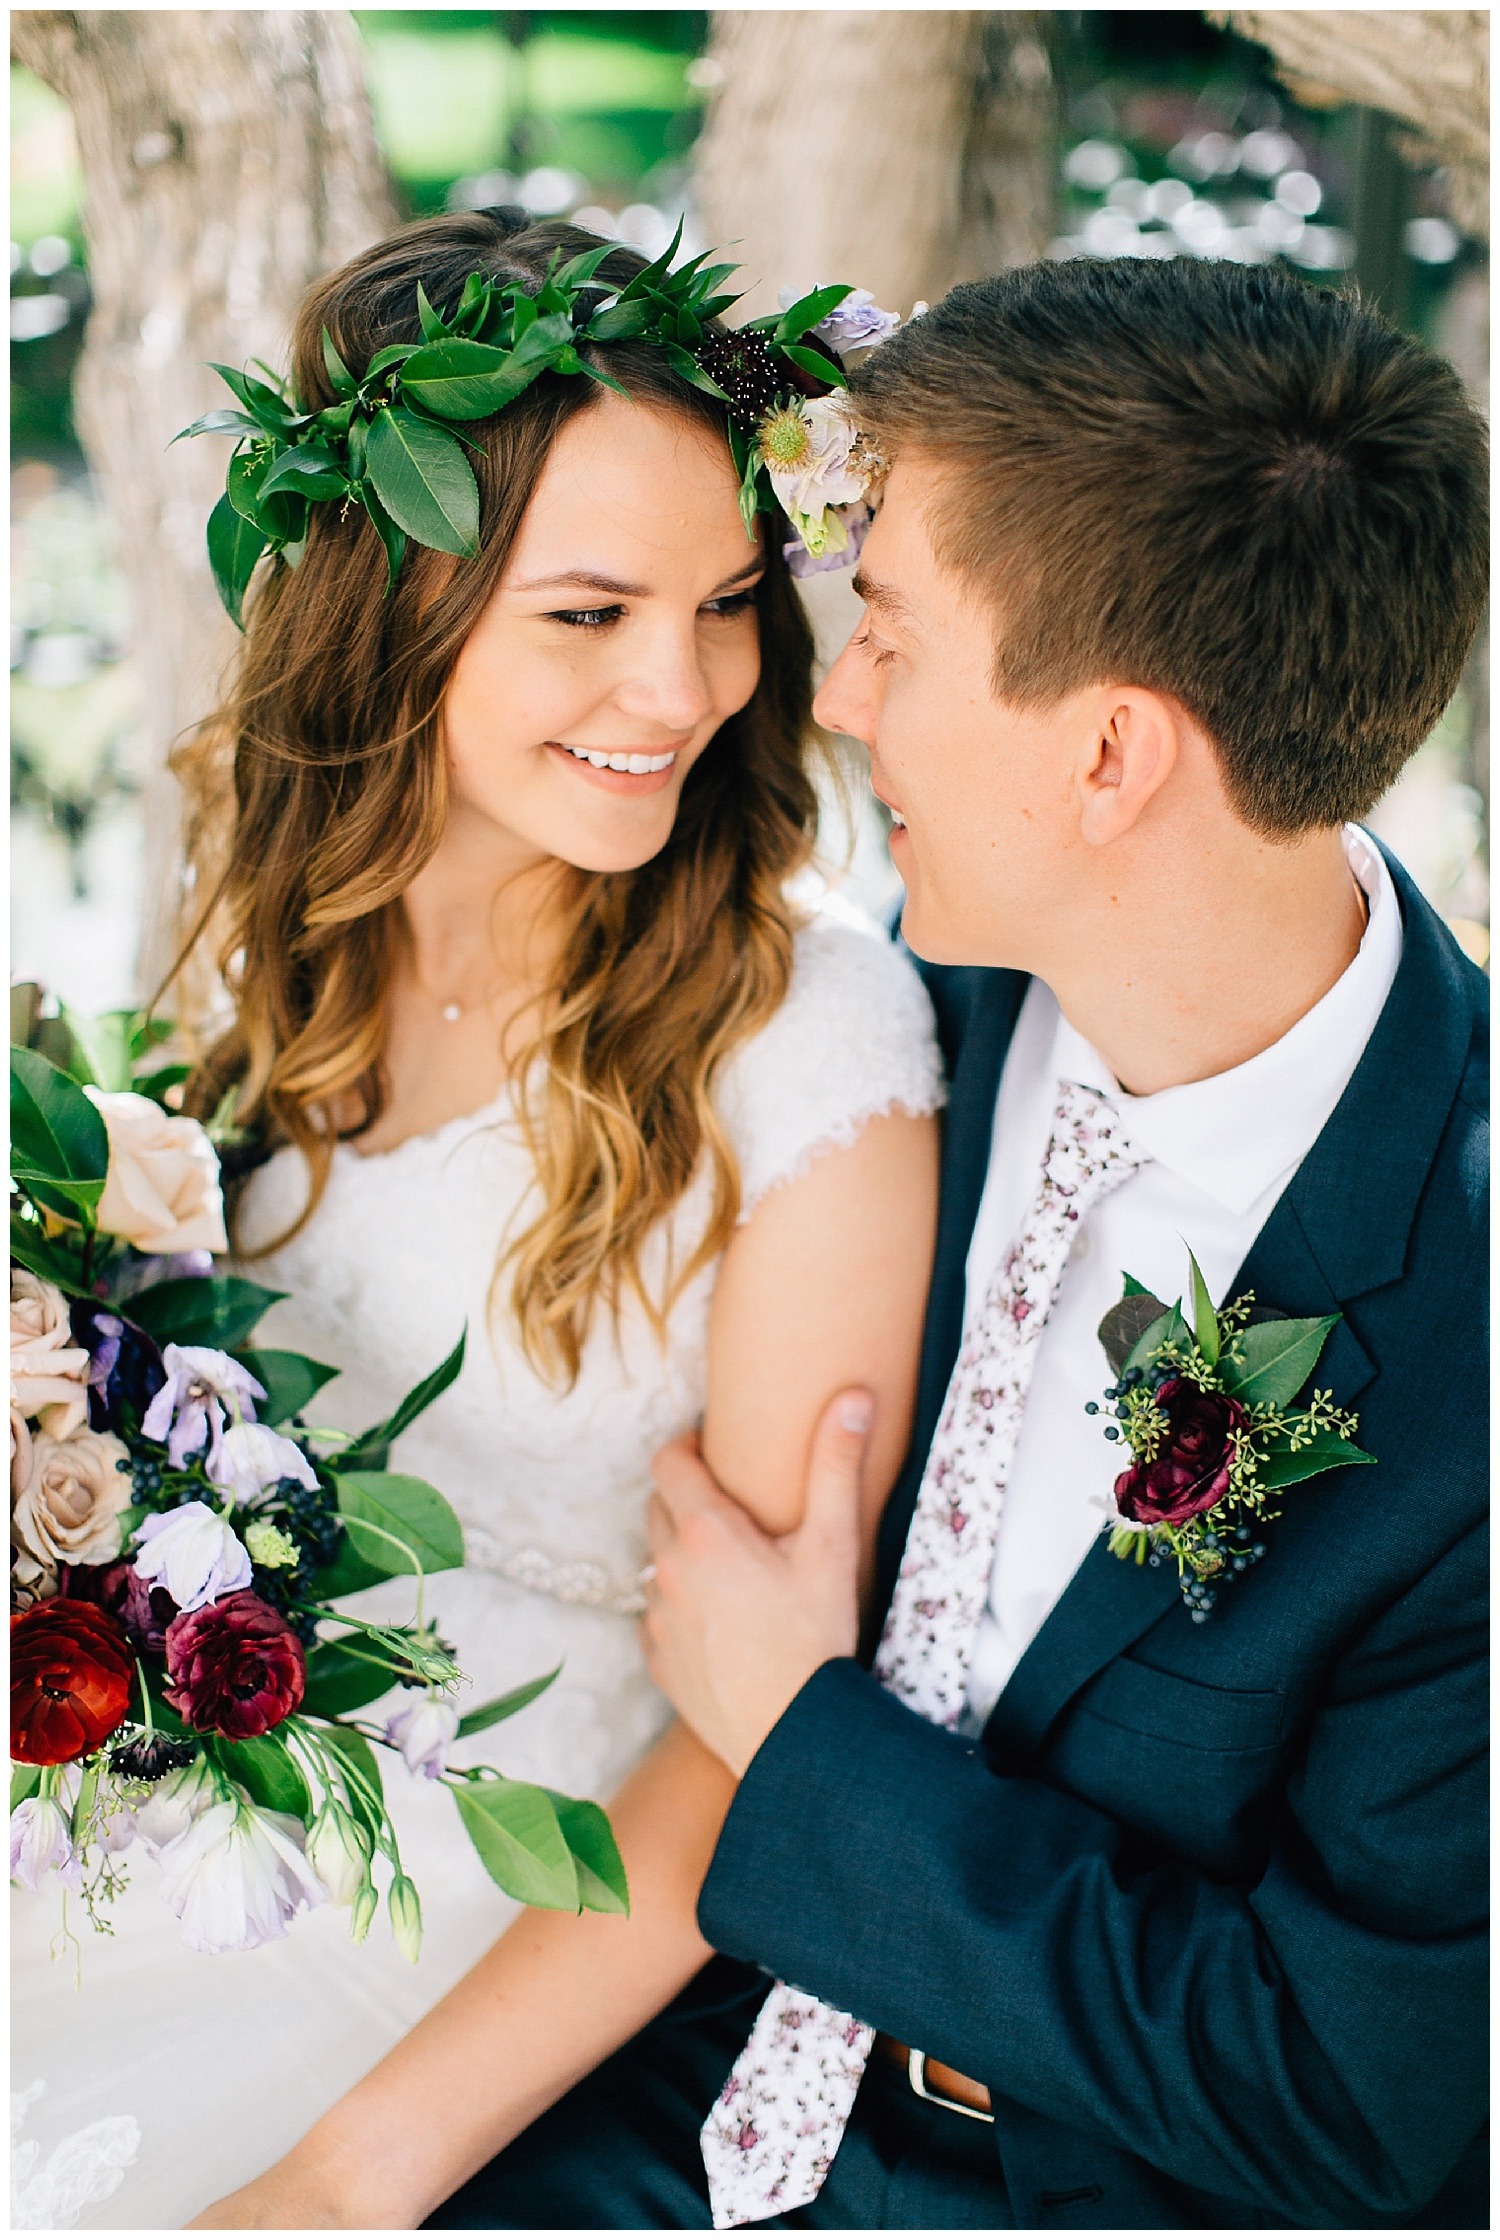 Brad + Rachel | Simple, Organic + Elegant Wedding | Kentucky Florist